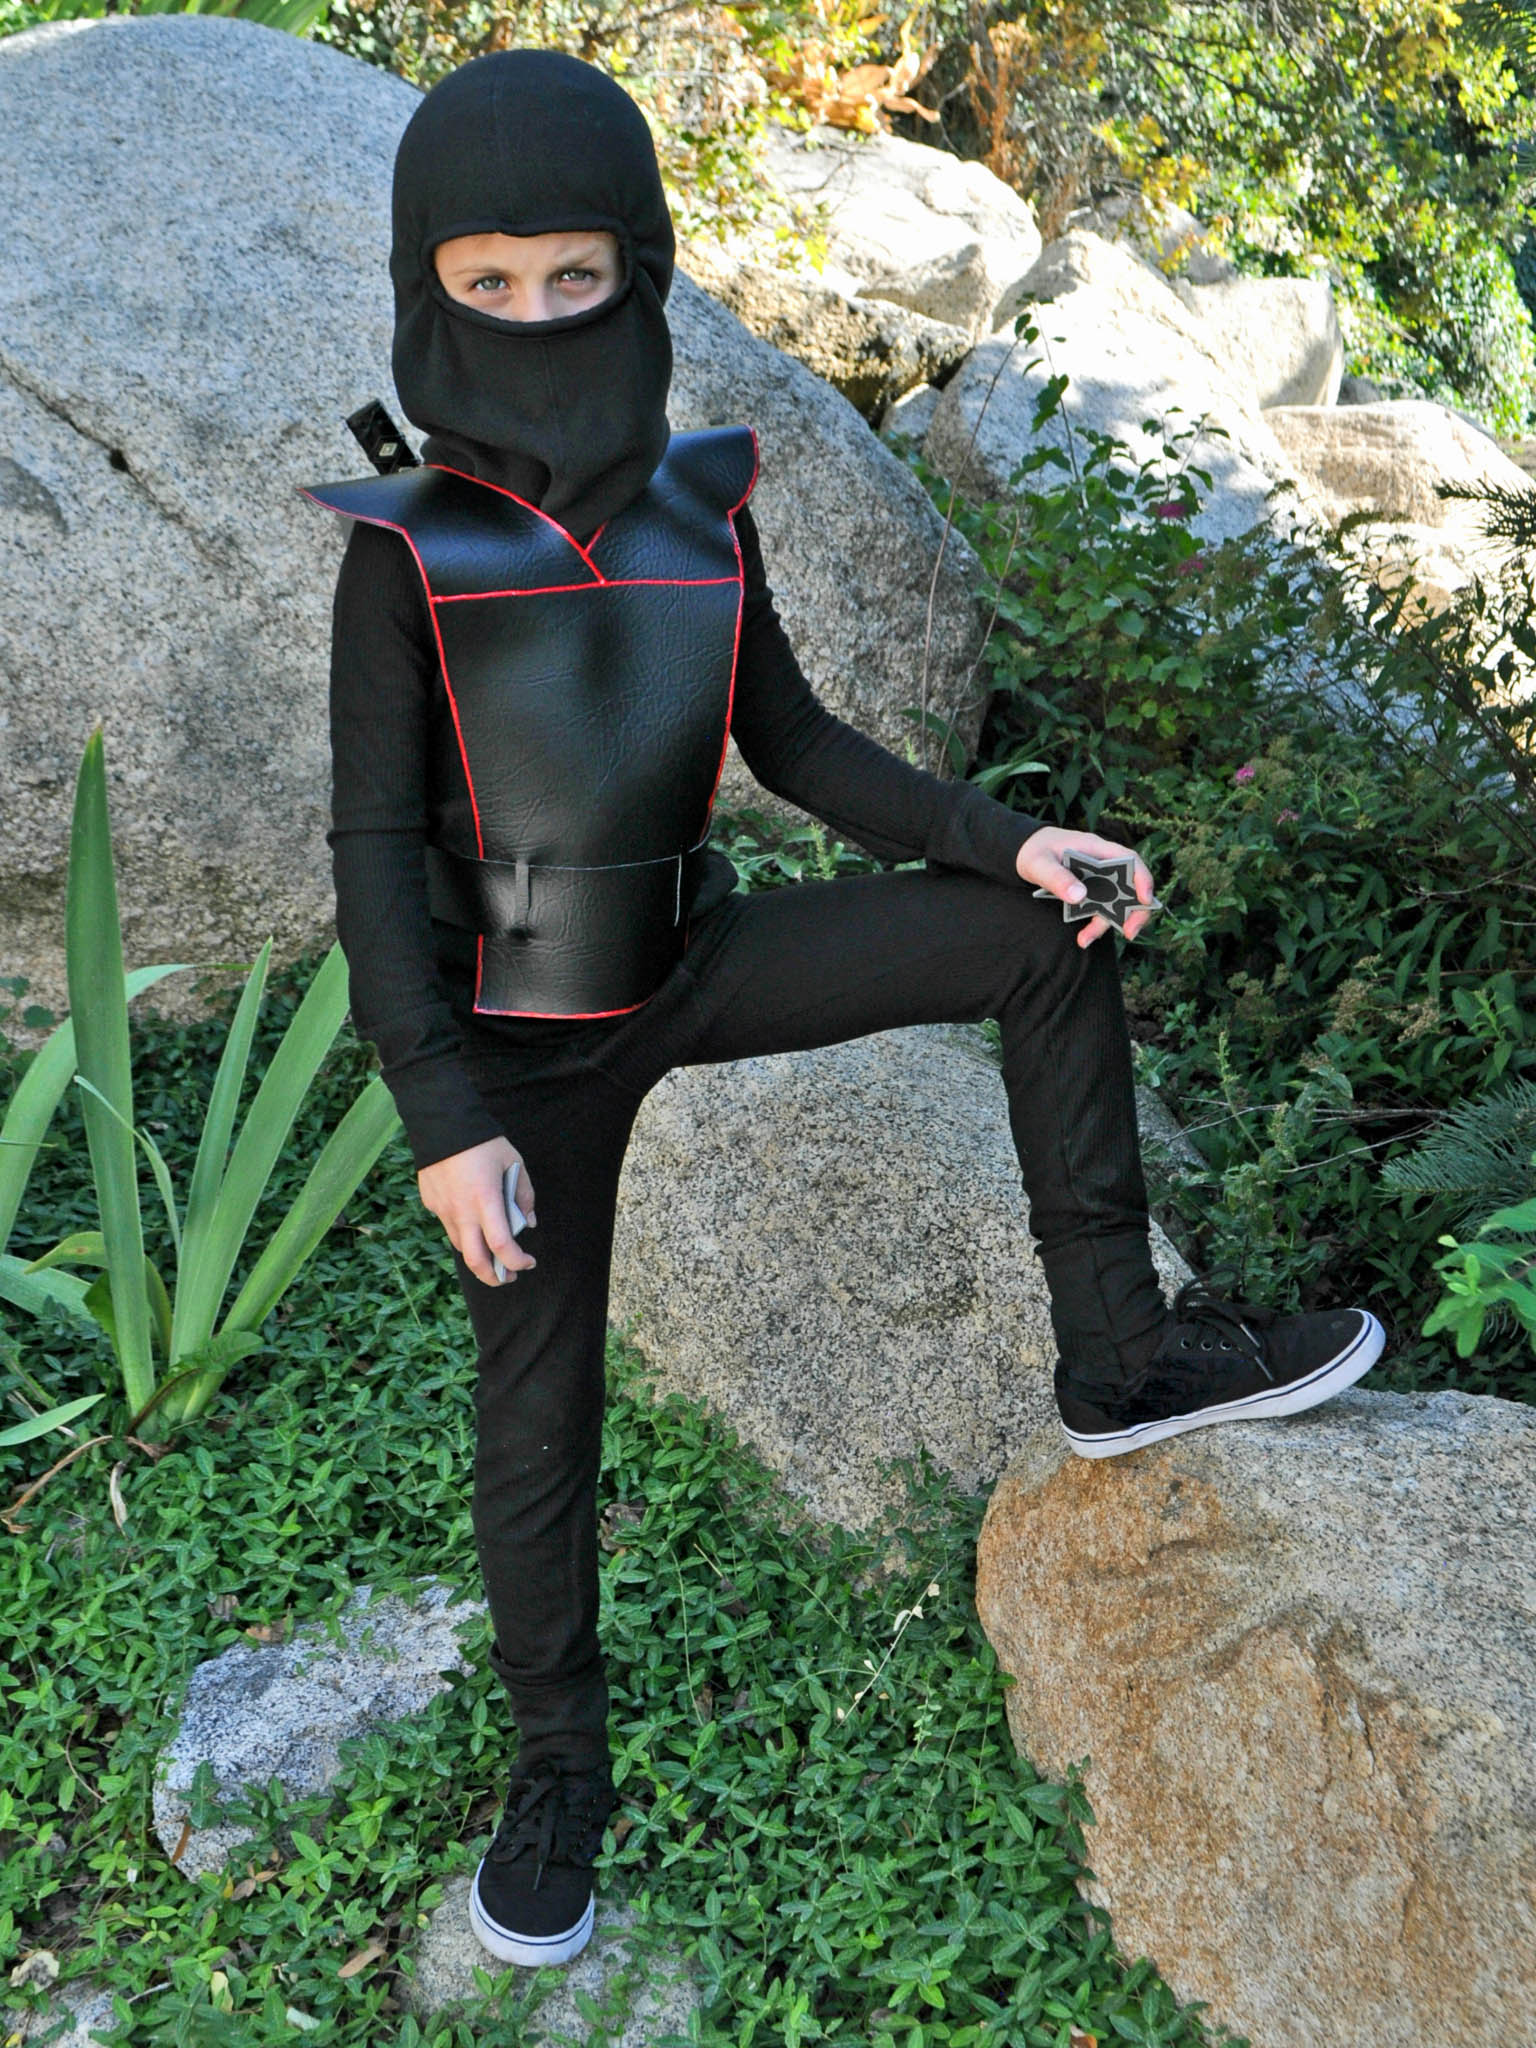 diy costumes for college be sneaky ninja